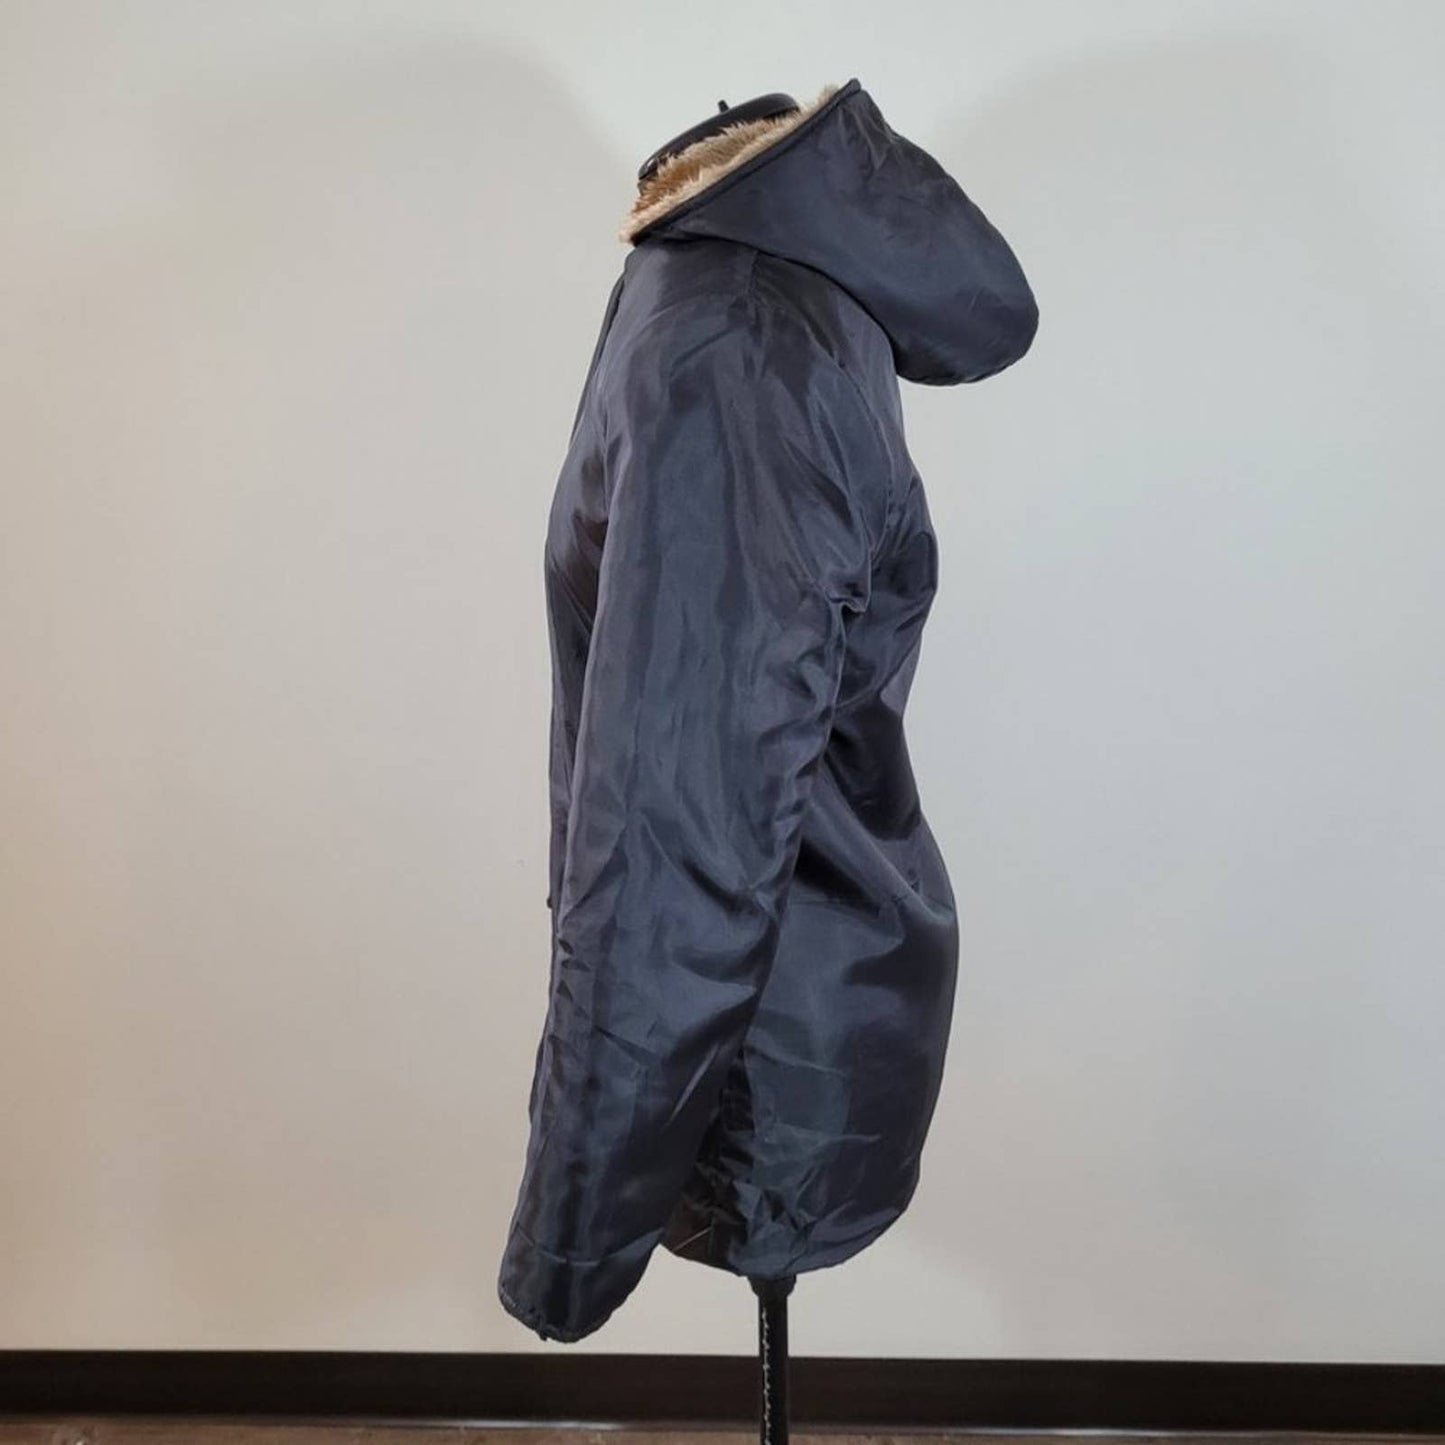 Mr. D. Style Faux Fur Lined Coat - Size MediumMarkita's ClosetMr. D. Style